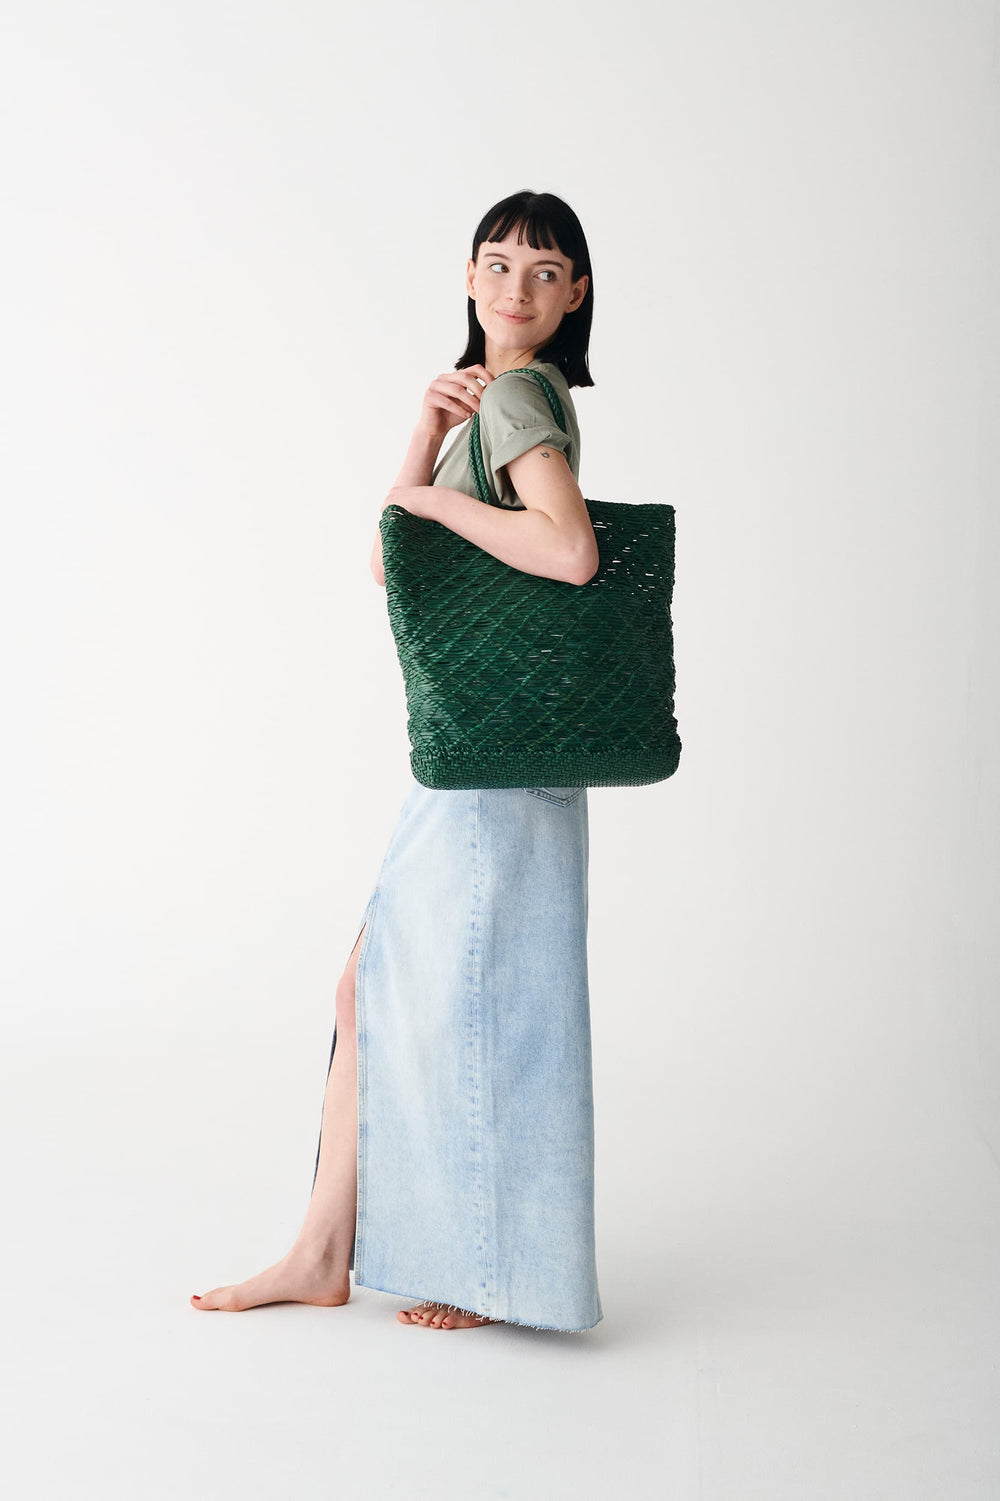 Dragon Diffusion Nantucket Interwoven Leather Tote Bag - Green